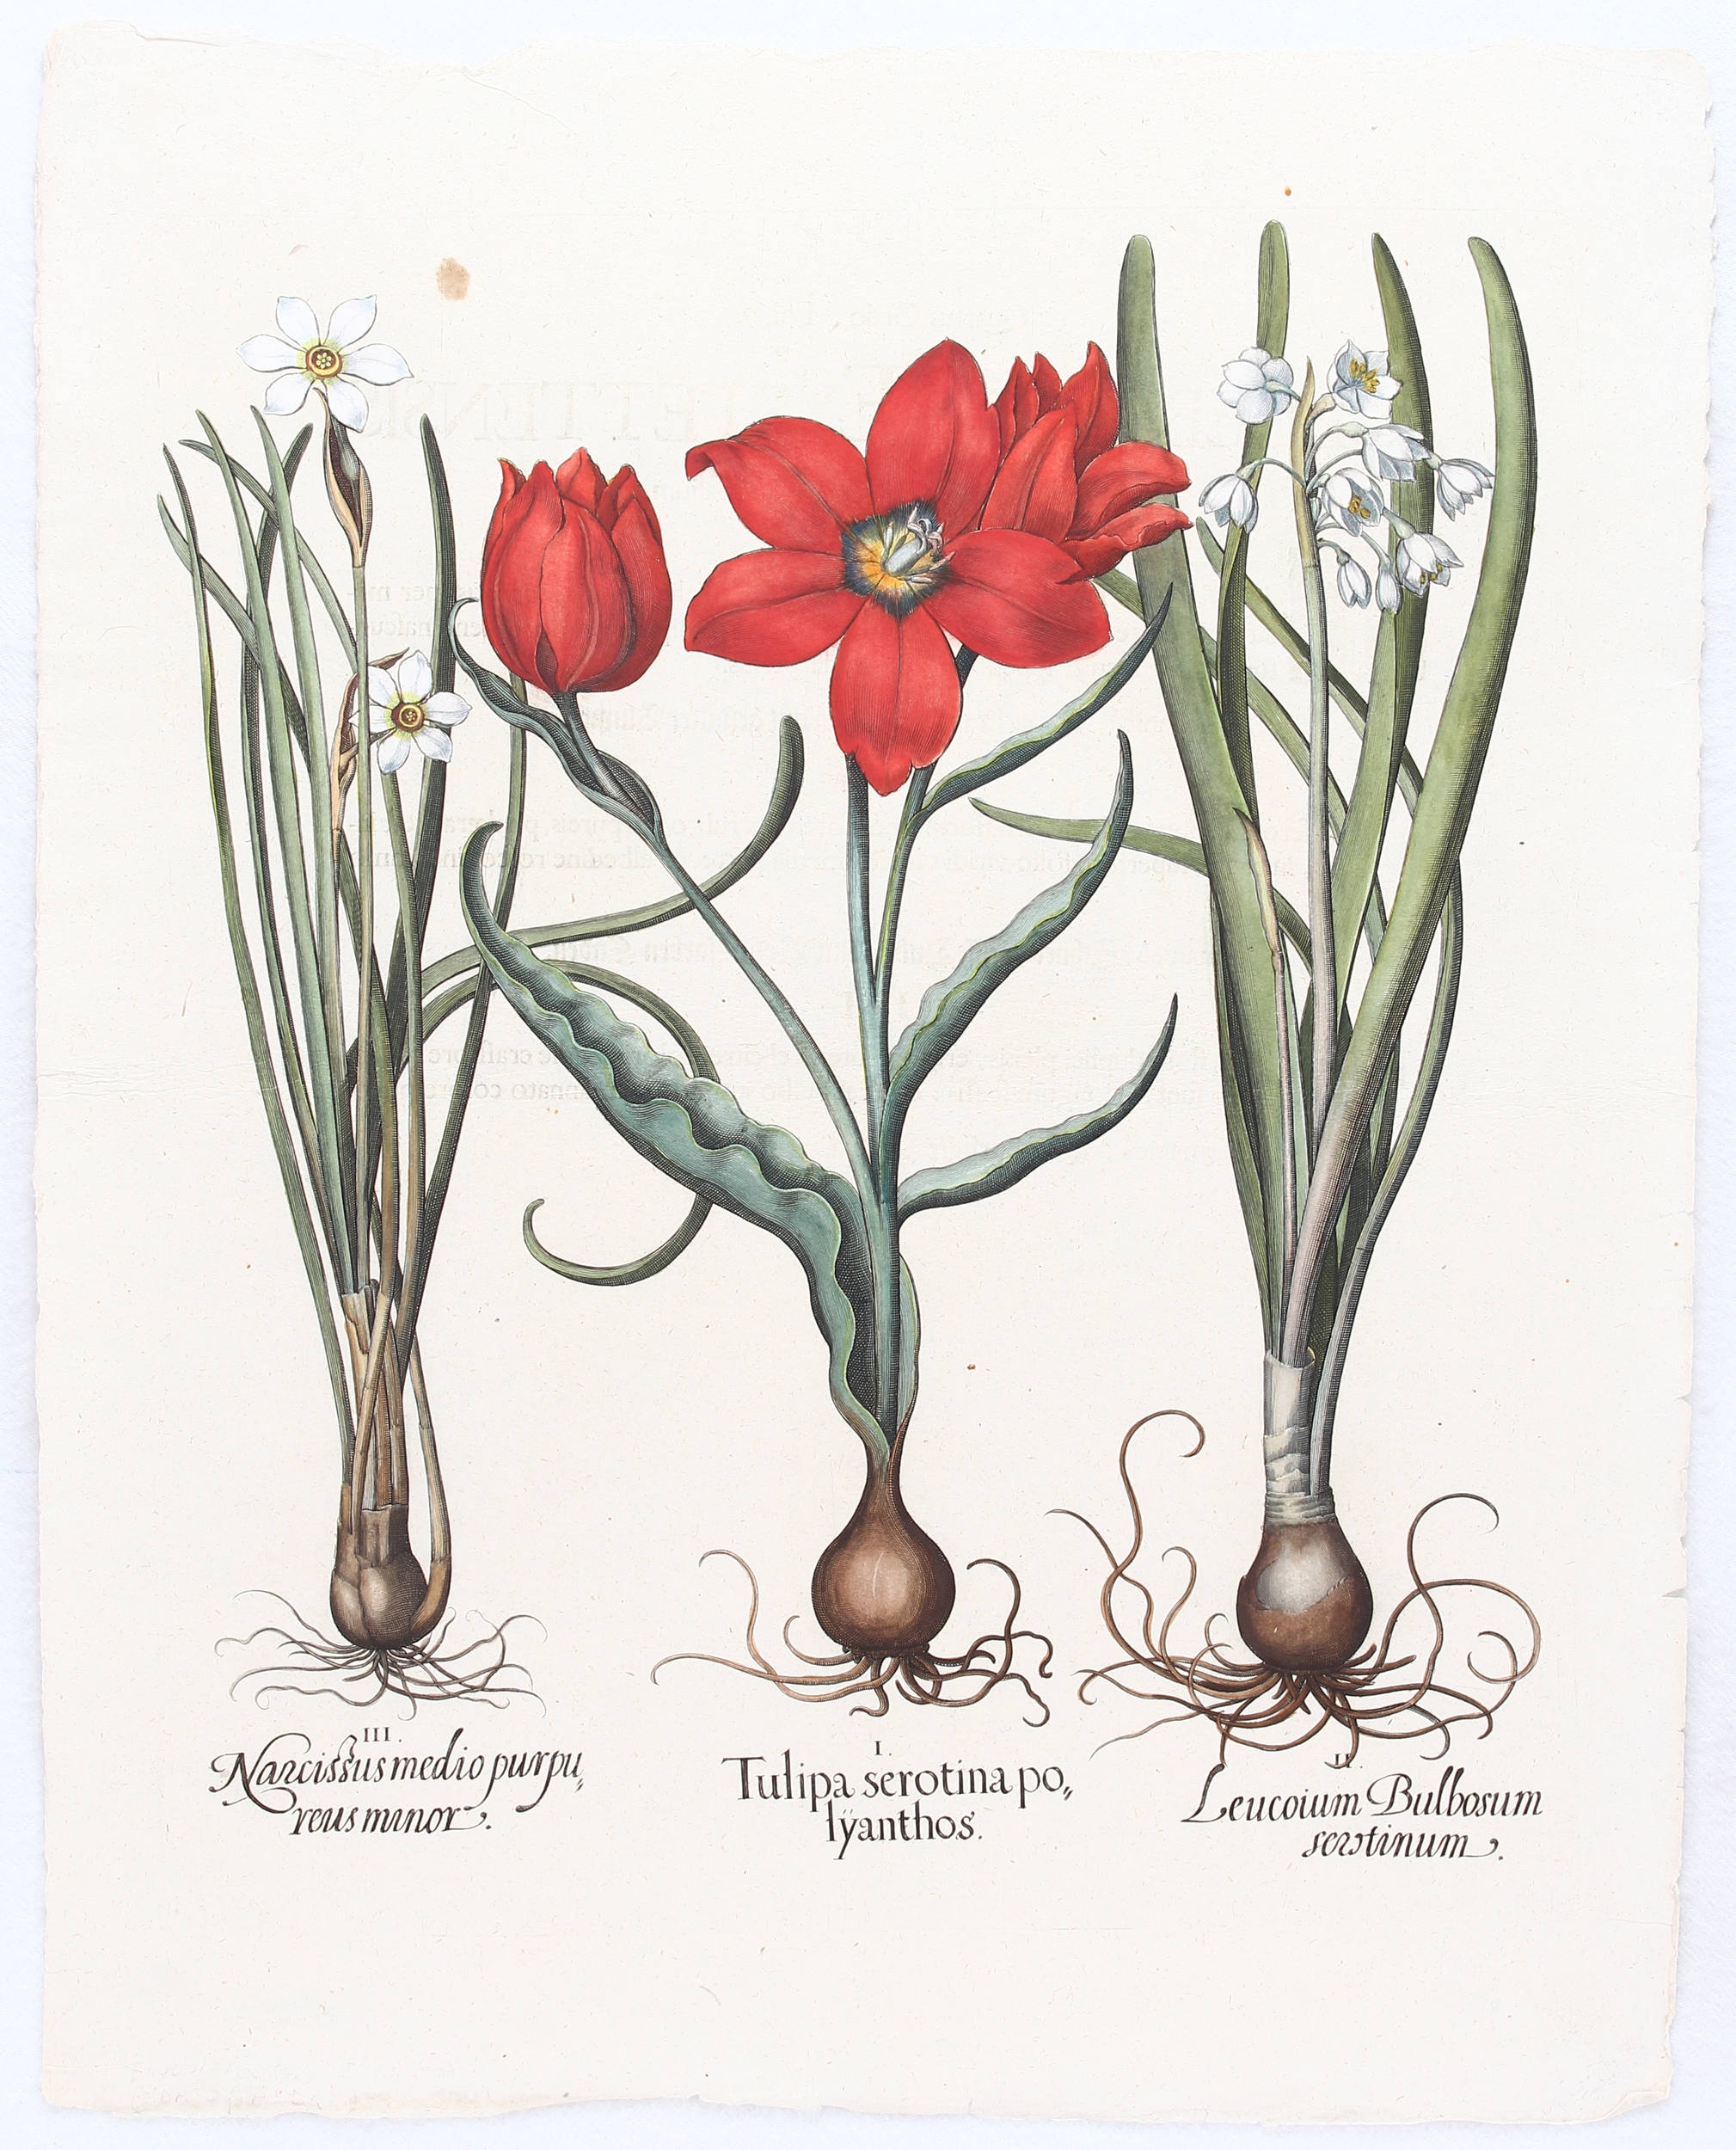 Tulipa serotina polyanthos, Leucoium Bulbosum serotinum, Narcissus medio purpureus minor (Späte mehrblütige rote Tulpe, Sommerknotenblume, einblütige weiße Narzisse) by Basilius Besler